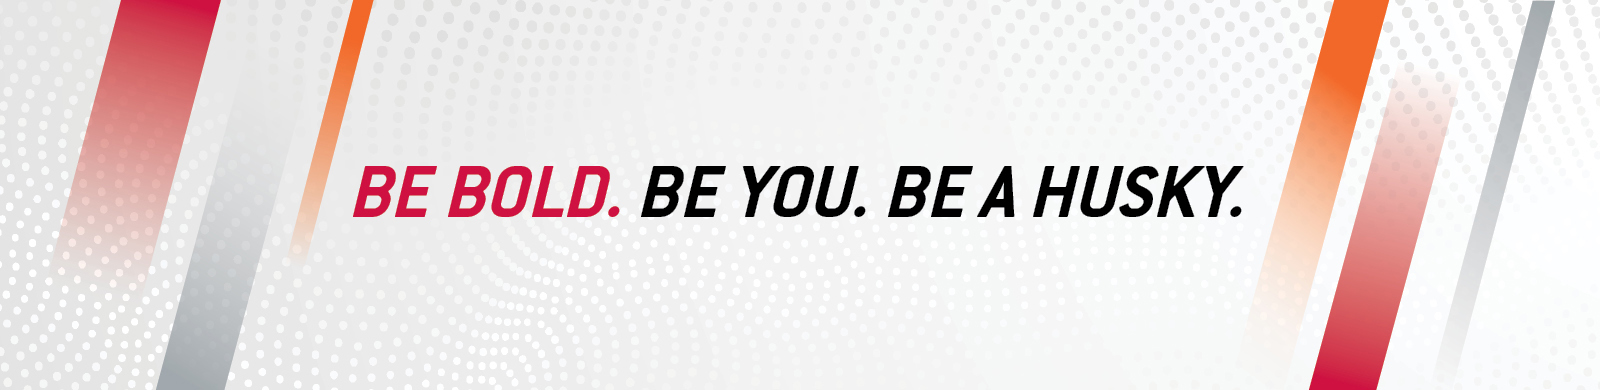 Be Bold. Be You. Be A Husky.